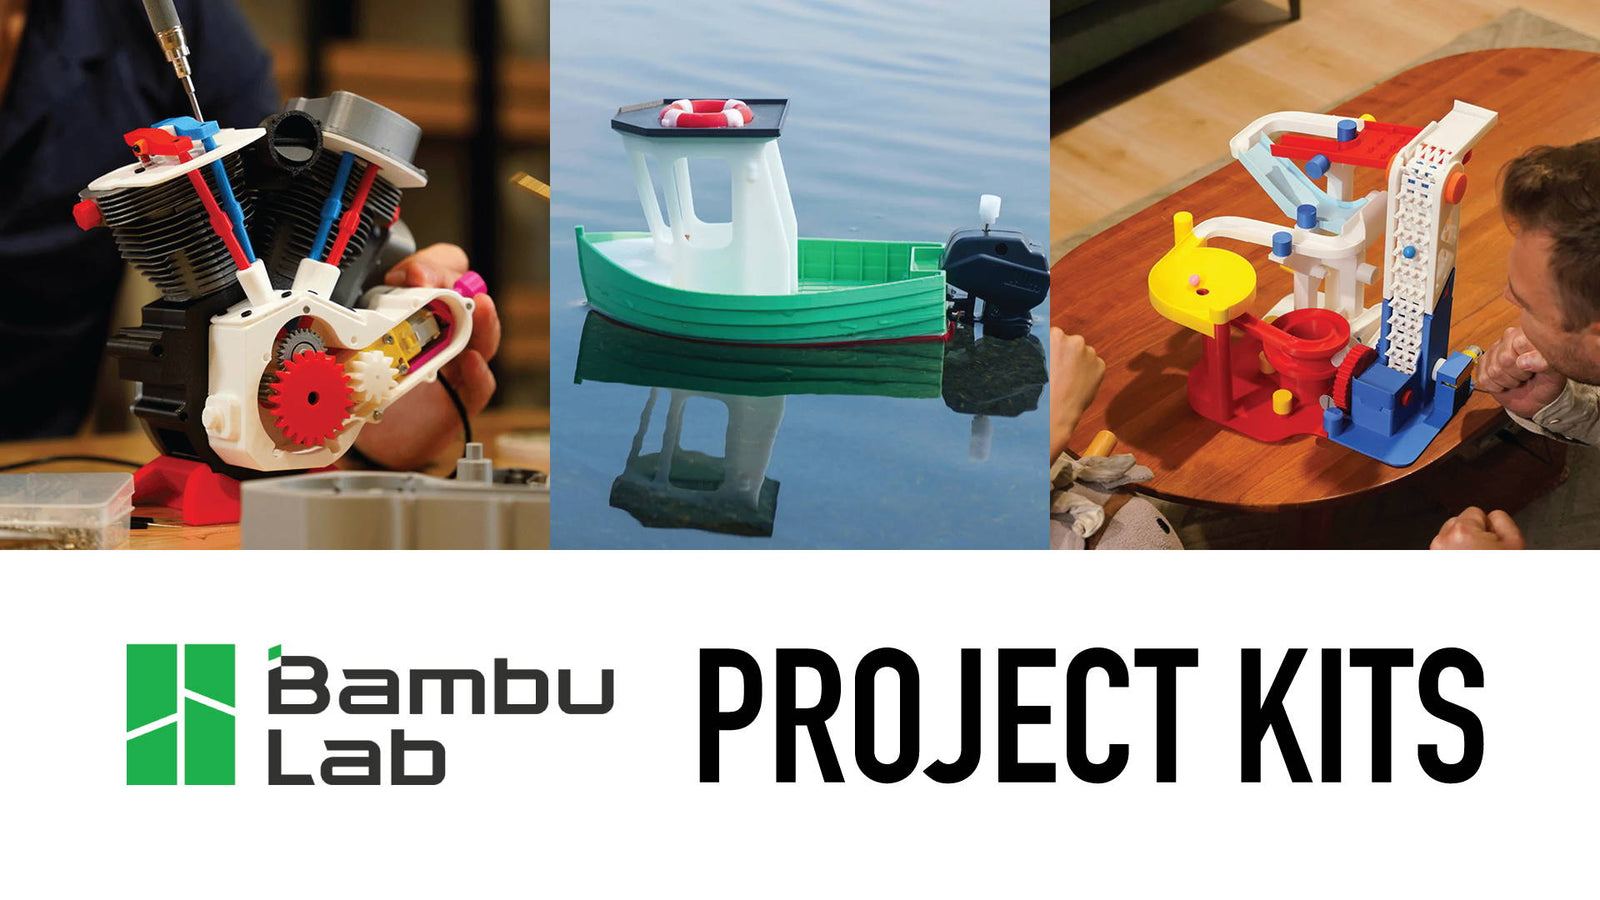 Bambu Lab Maker Kits Provide Fun Projects for Kids and Adults Alike!